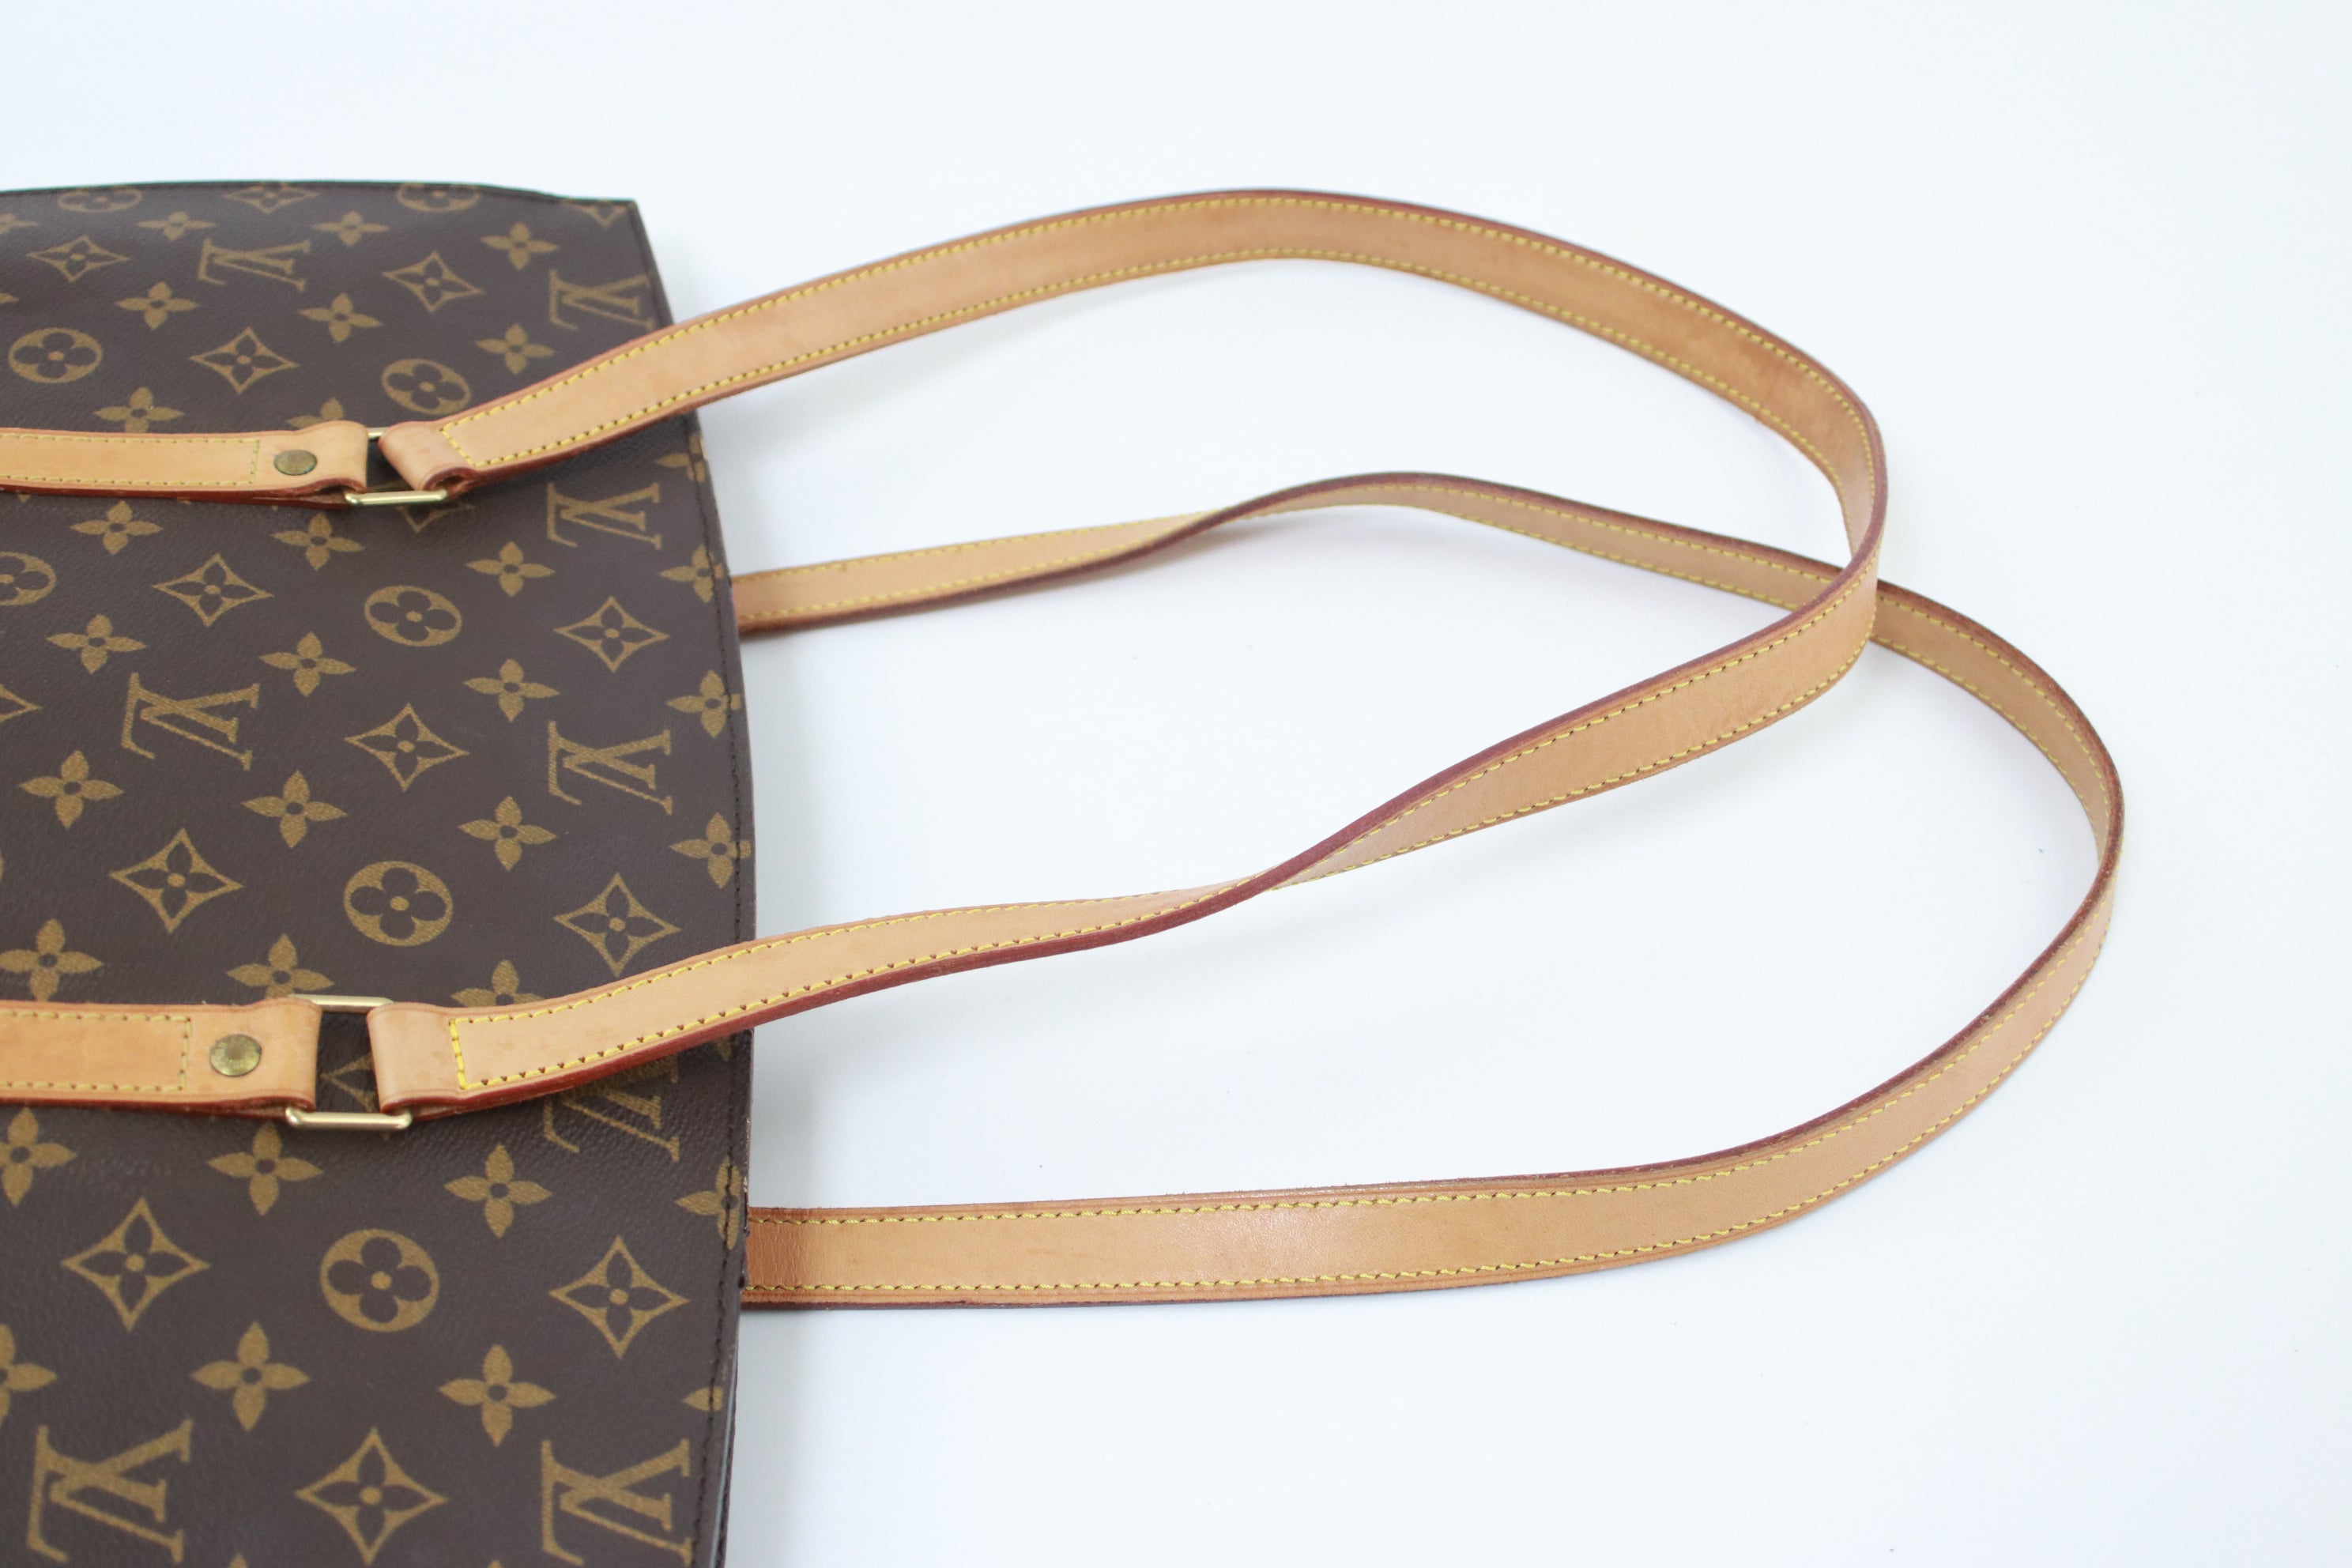 Louis Vuitton Babylone Shoulder Bag Used (6775)